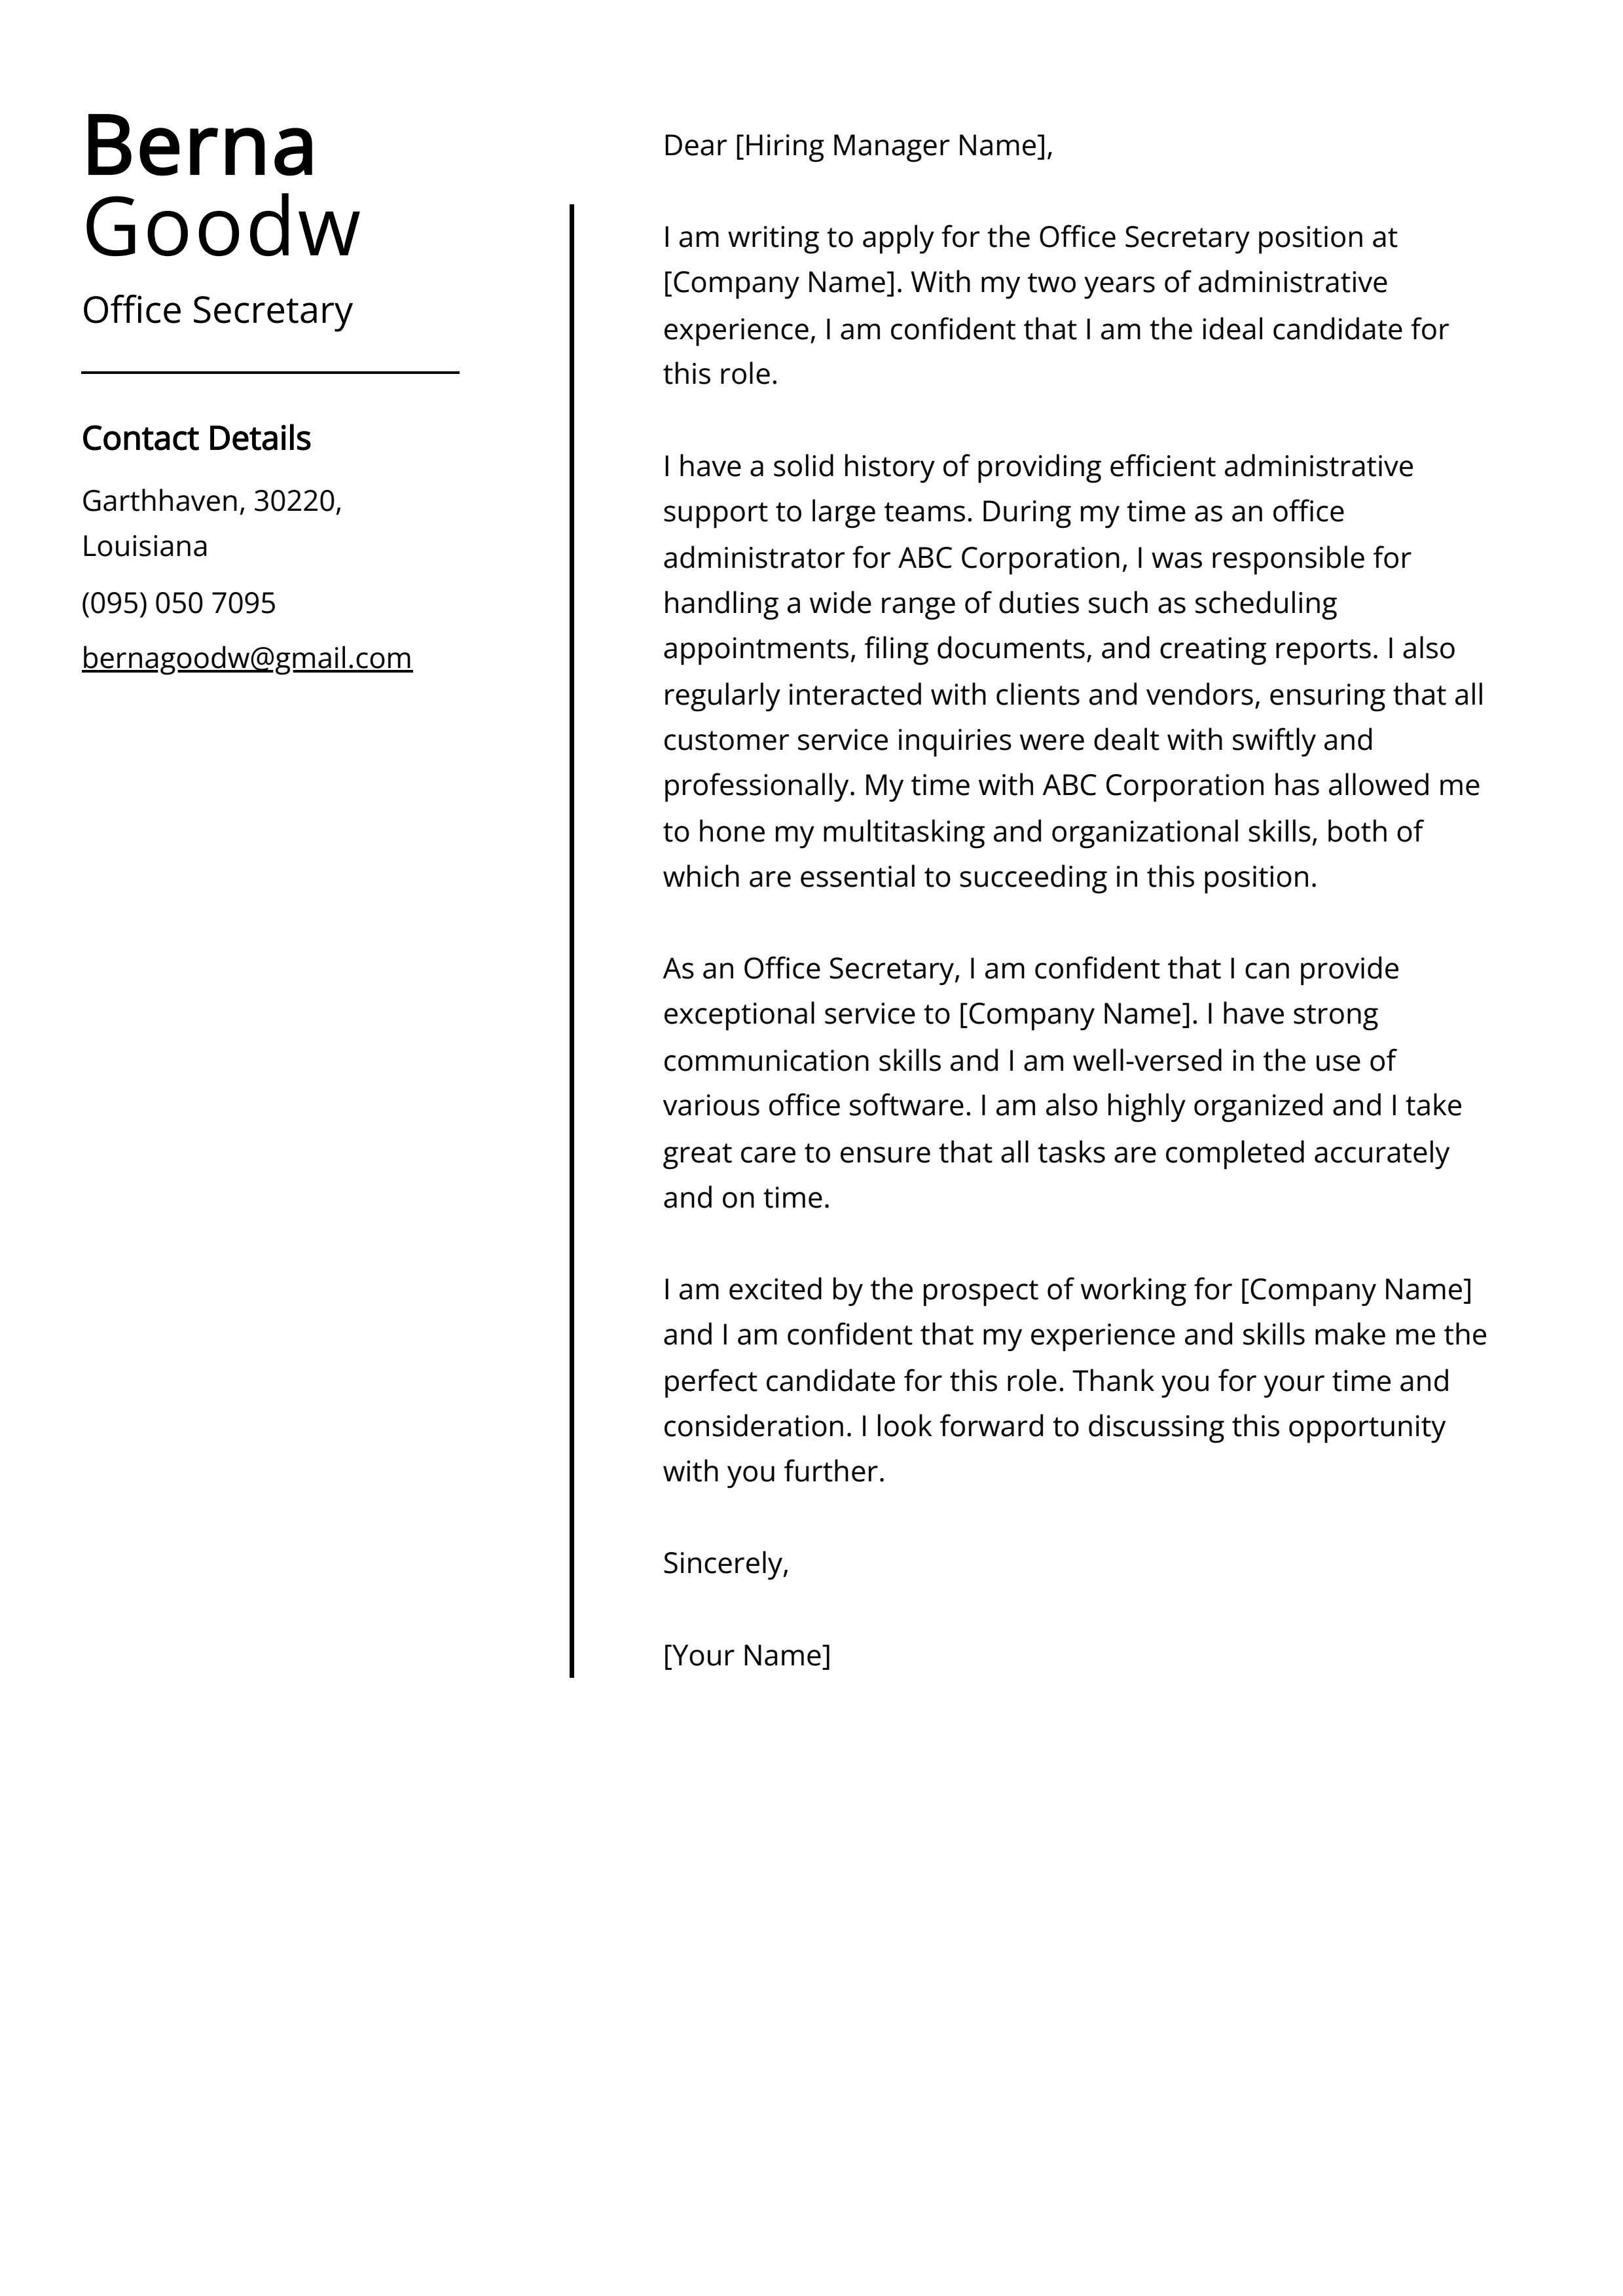 Office Secretary Cover Letter Example